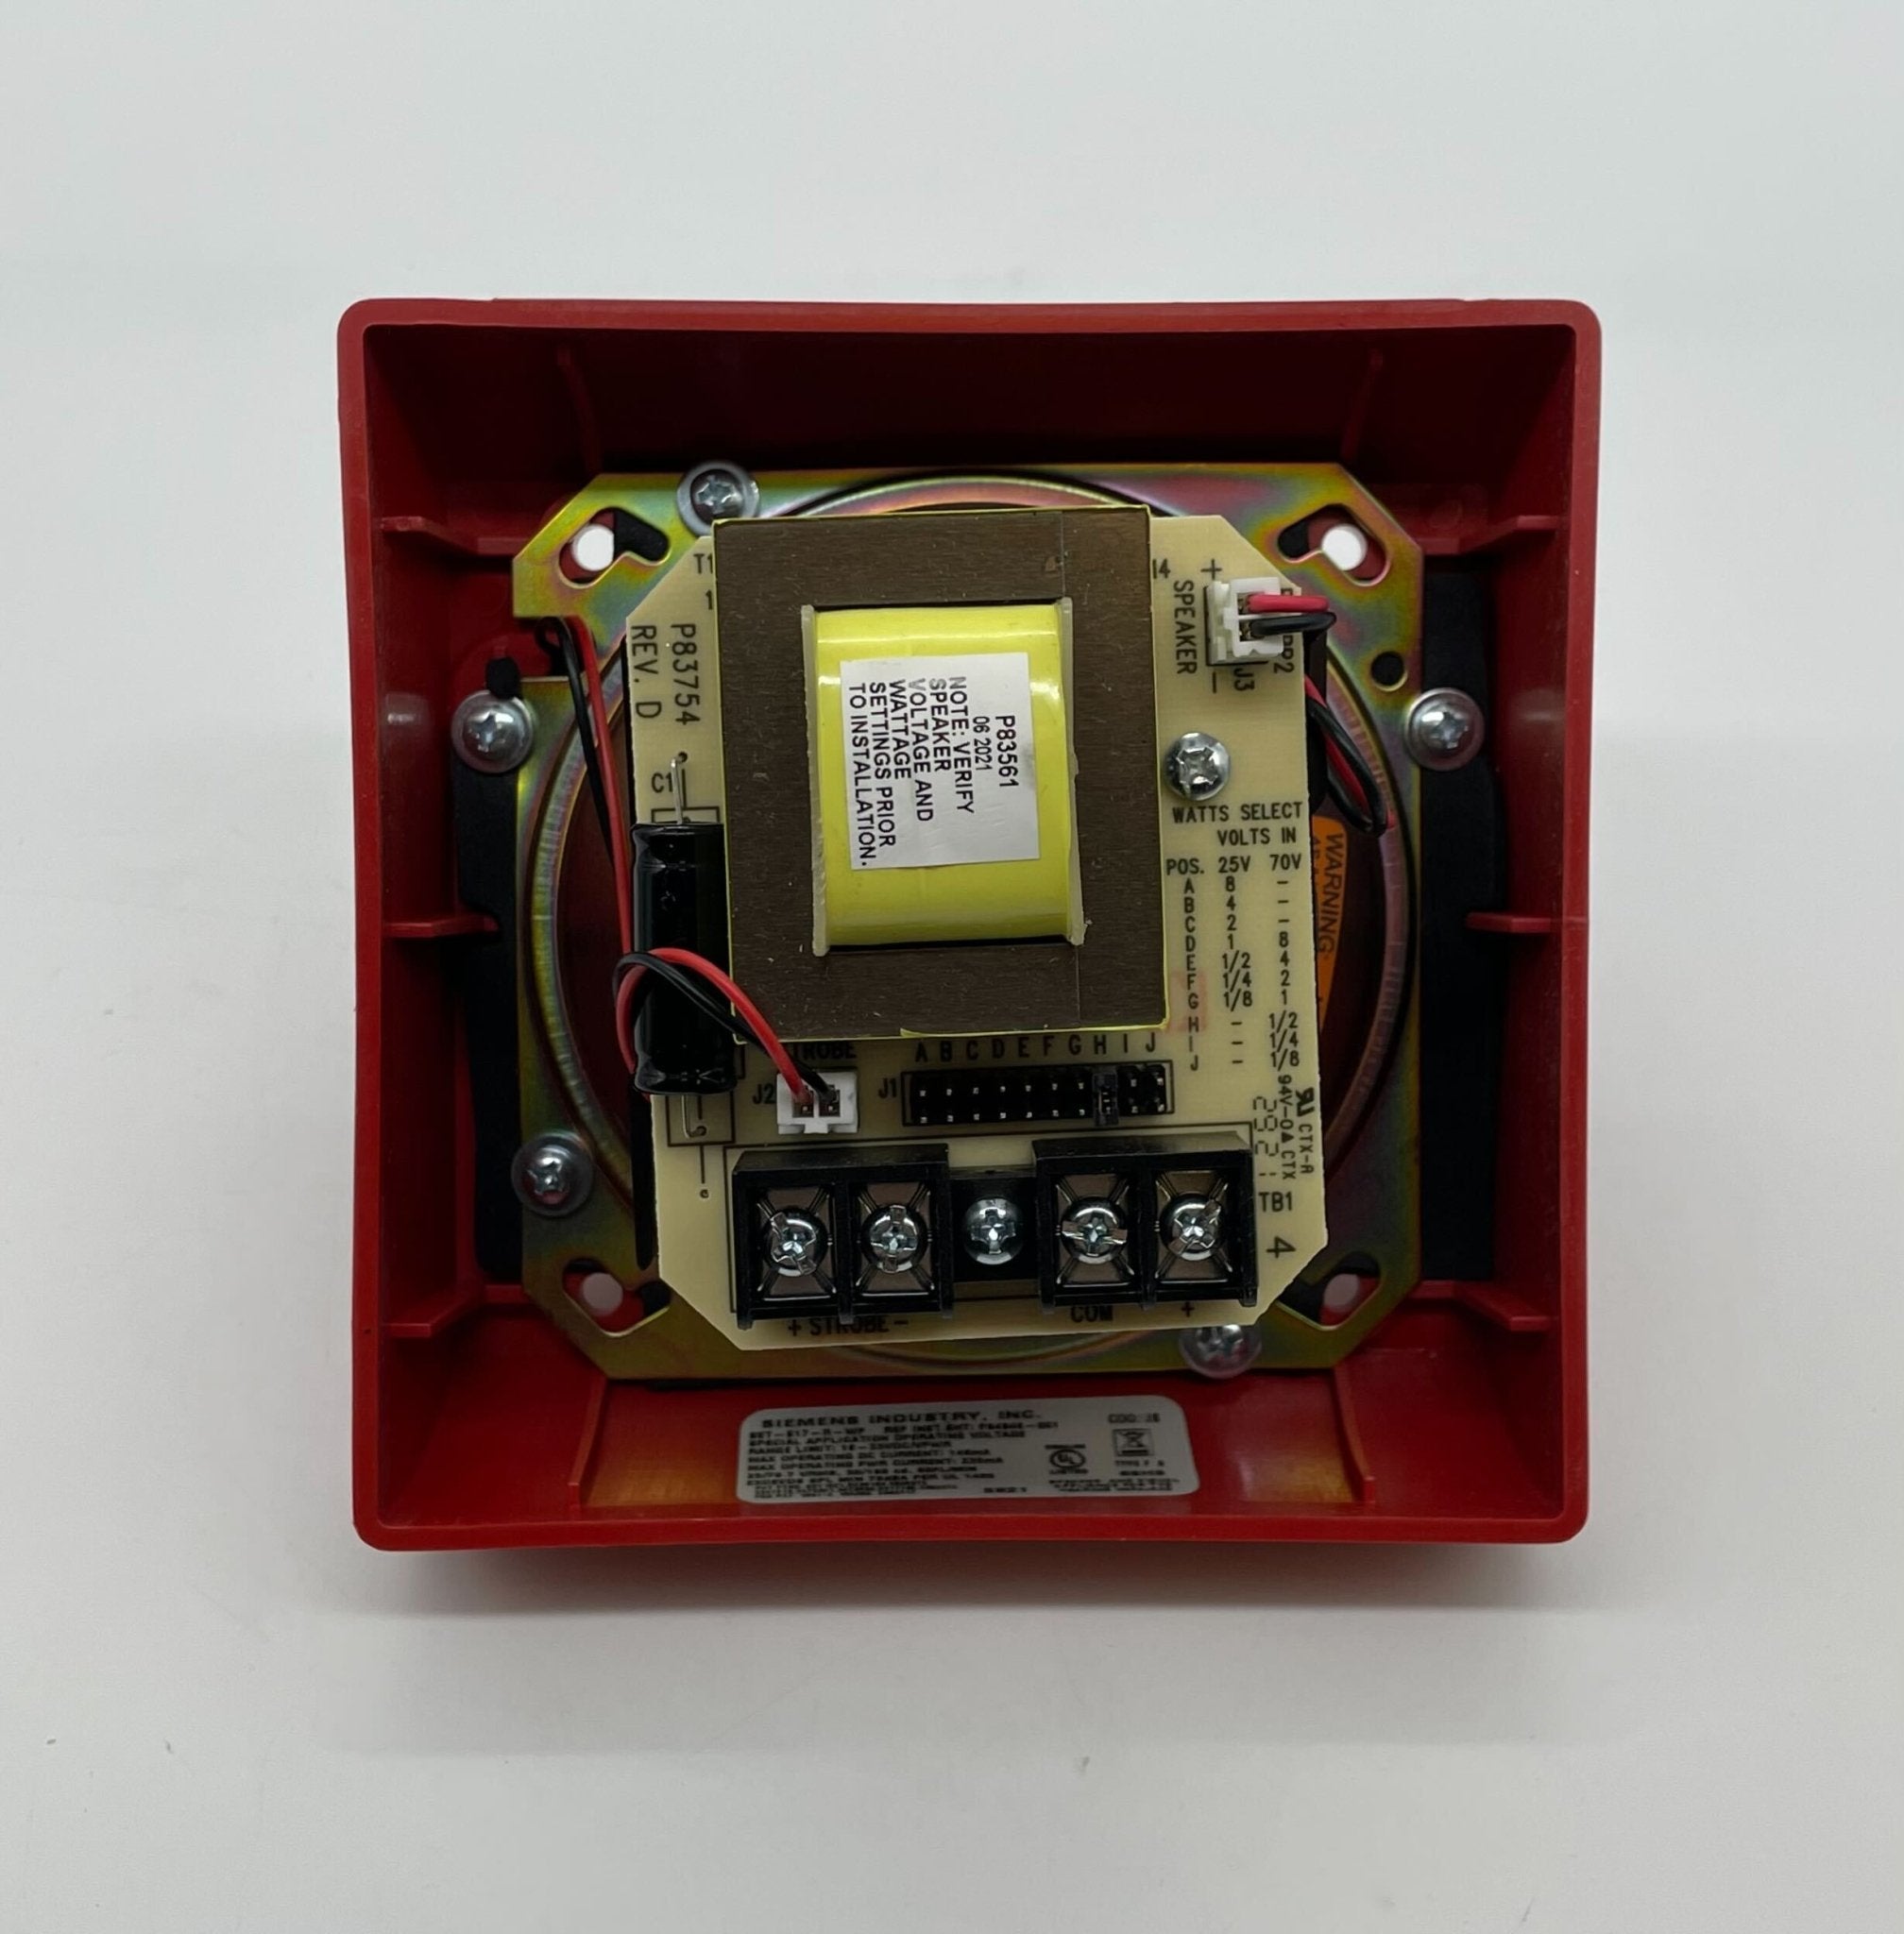 Siemens SET-S17-R-WP Et Spkr 15/75 Strobe Red - The Fire Alarm Supplier